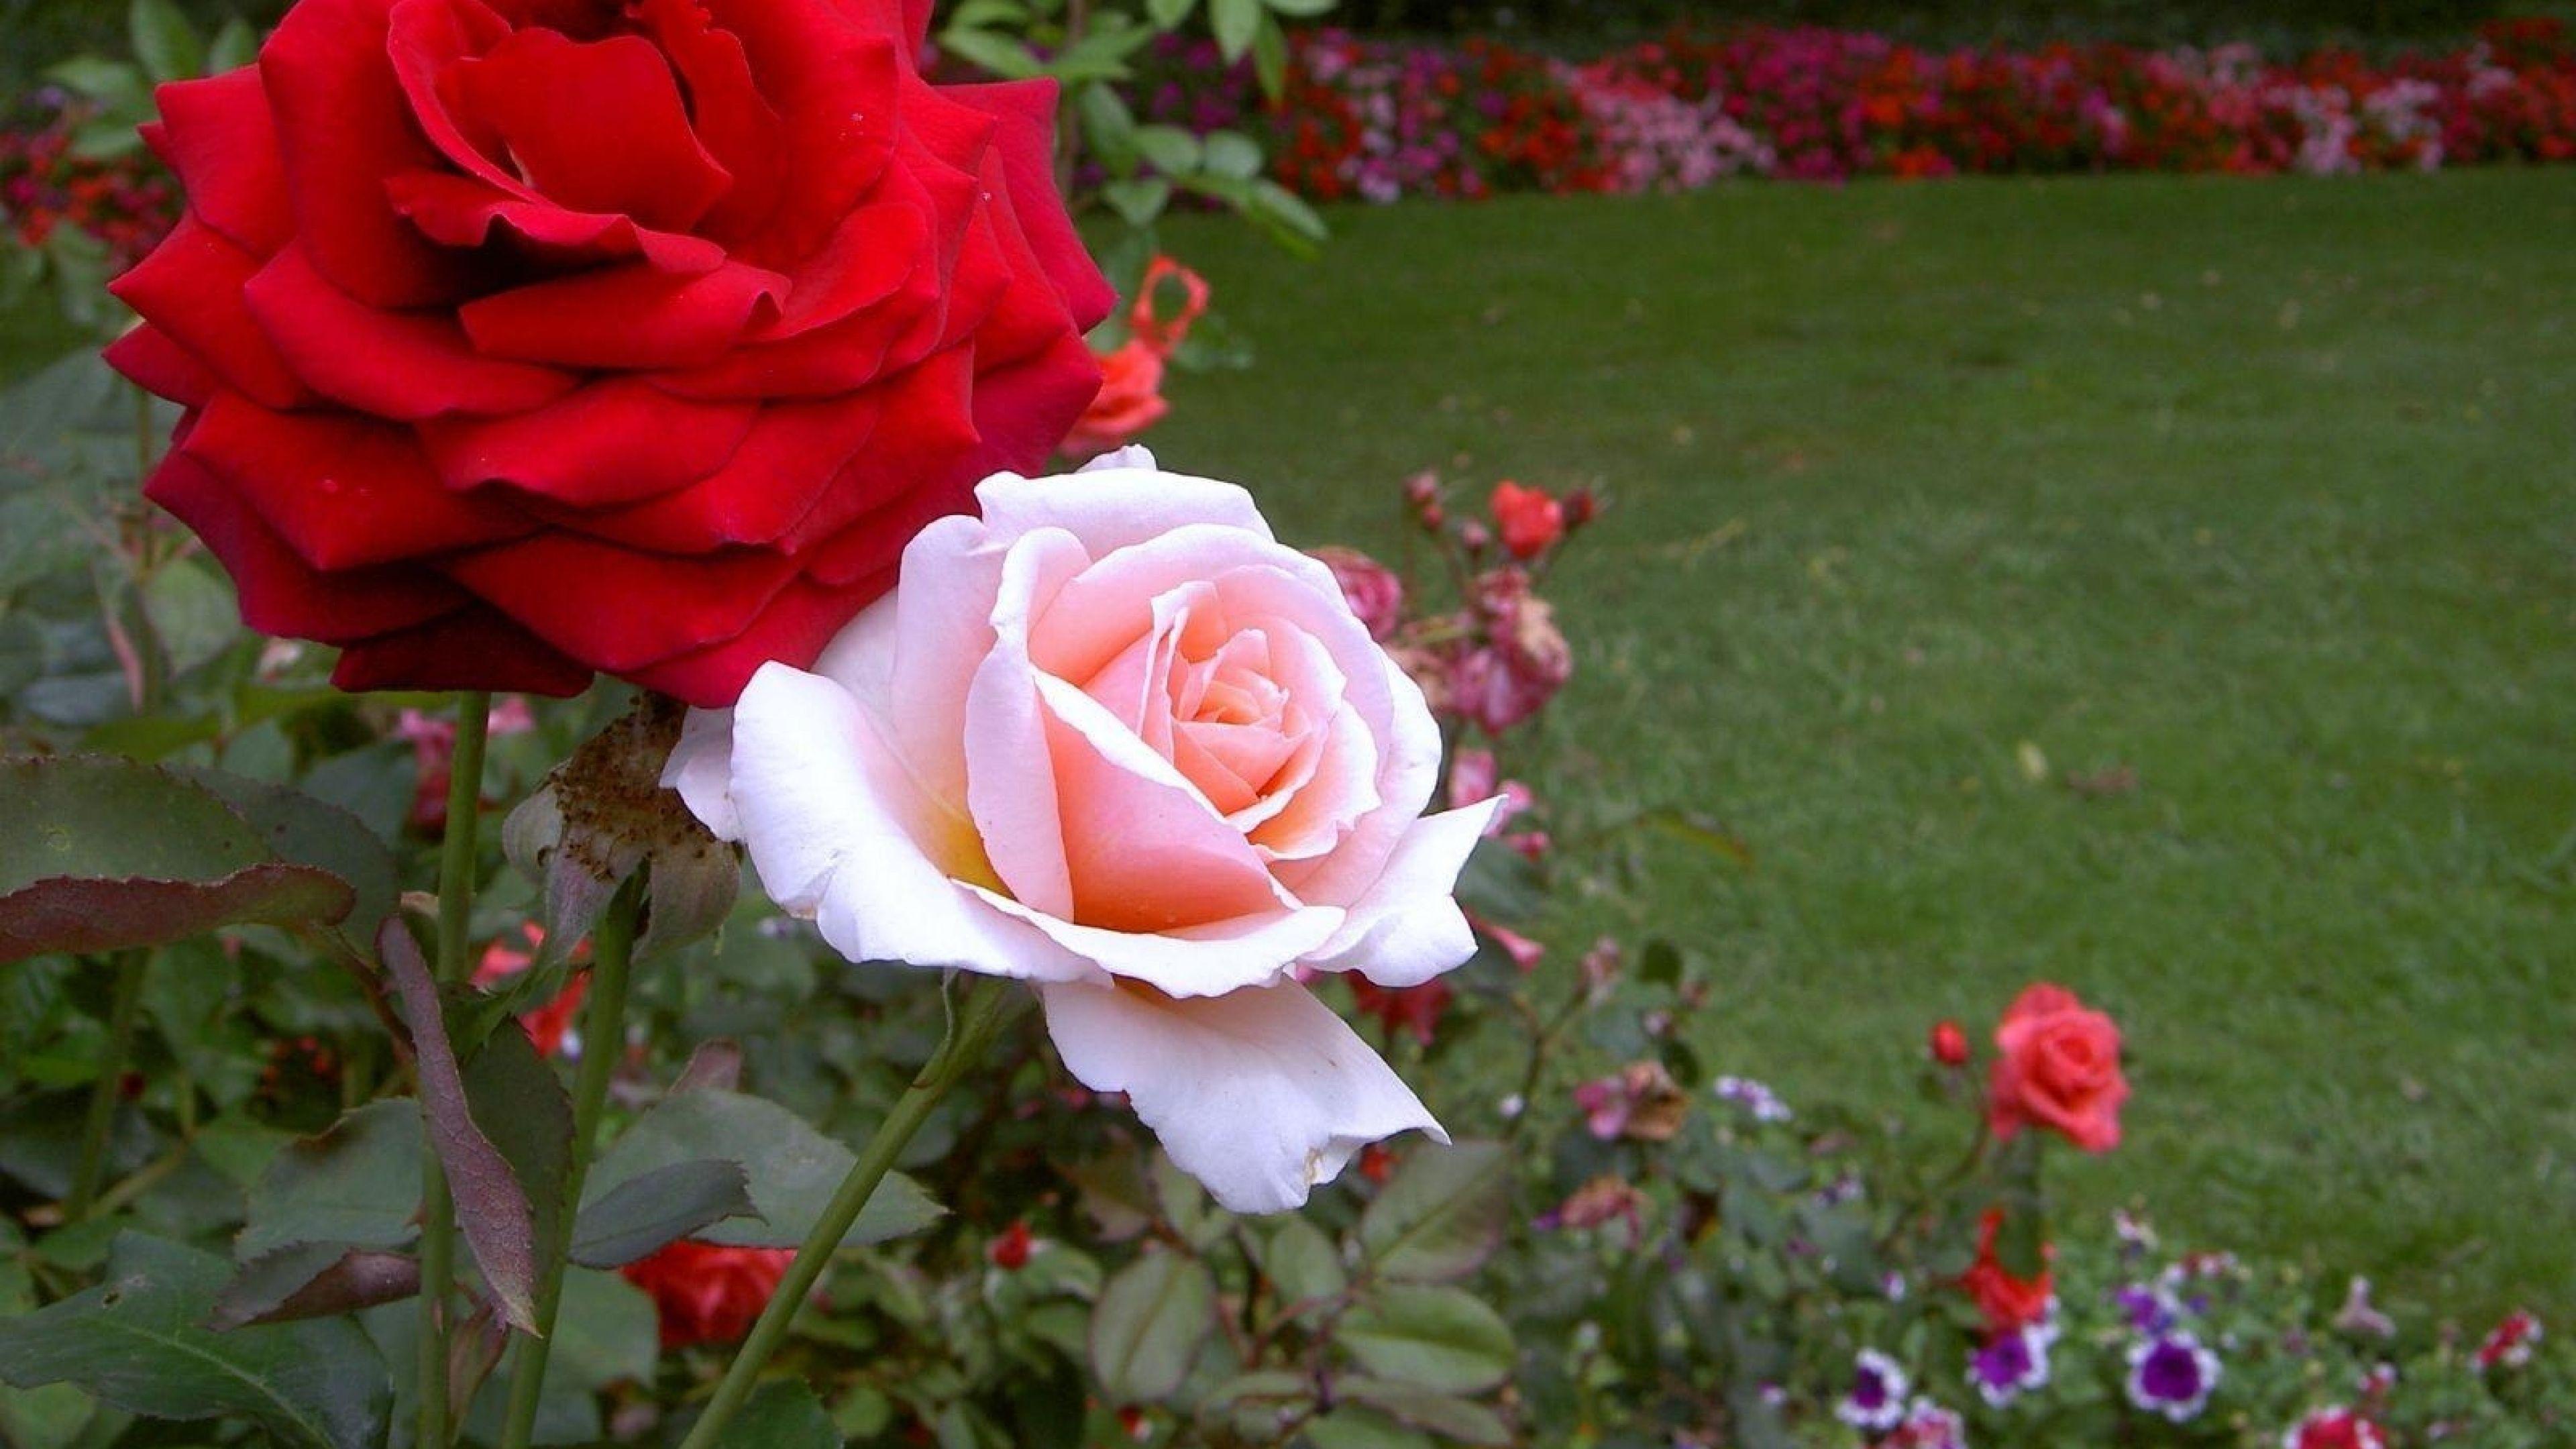 Photos Of Wallpaperroses Flowers Garden Flowerbed Rose Flower In HD